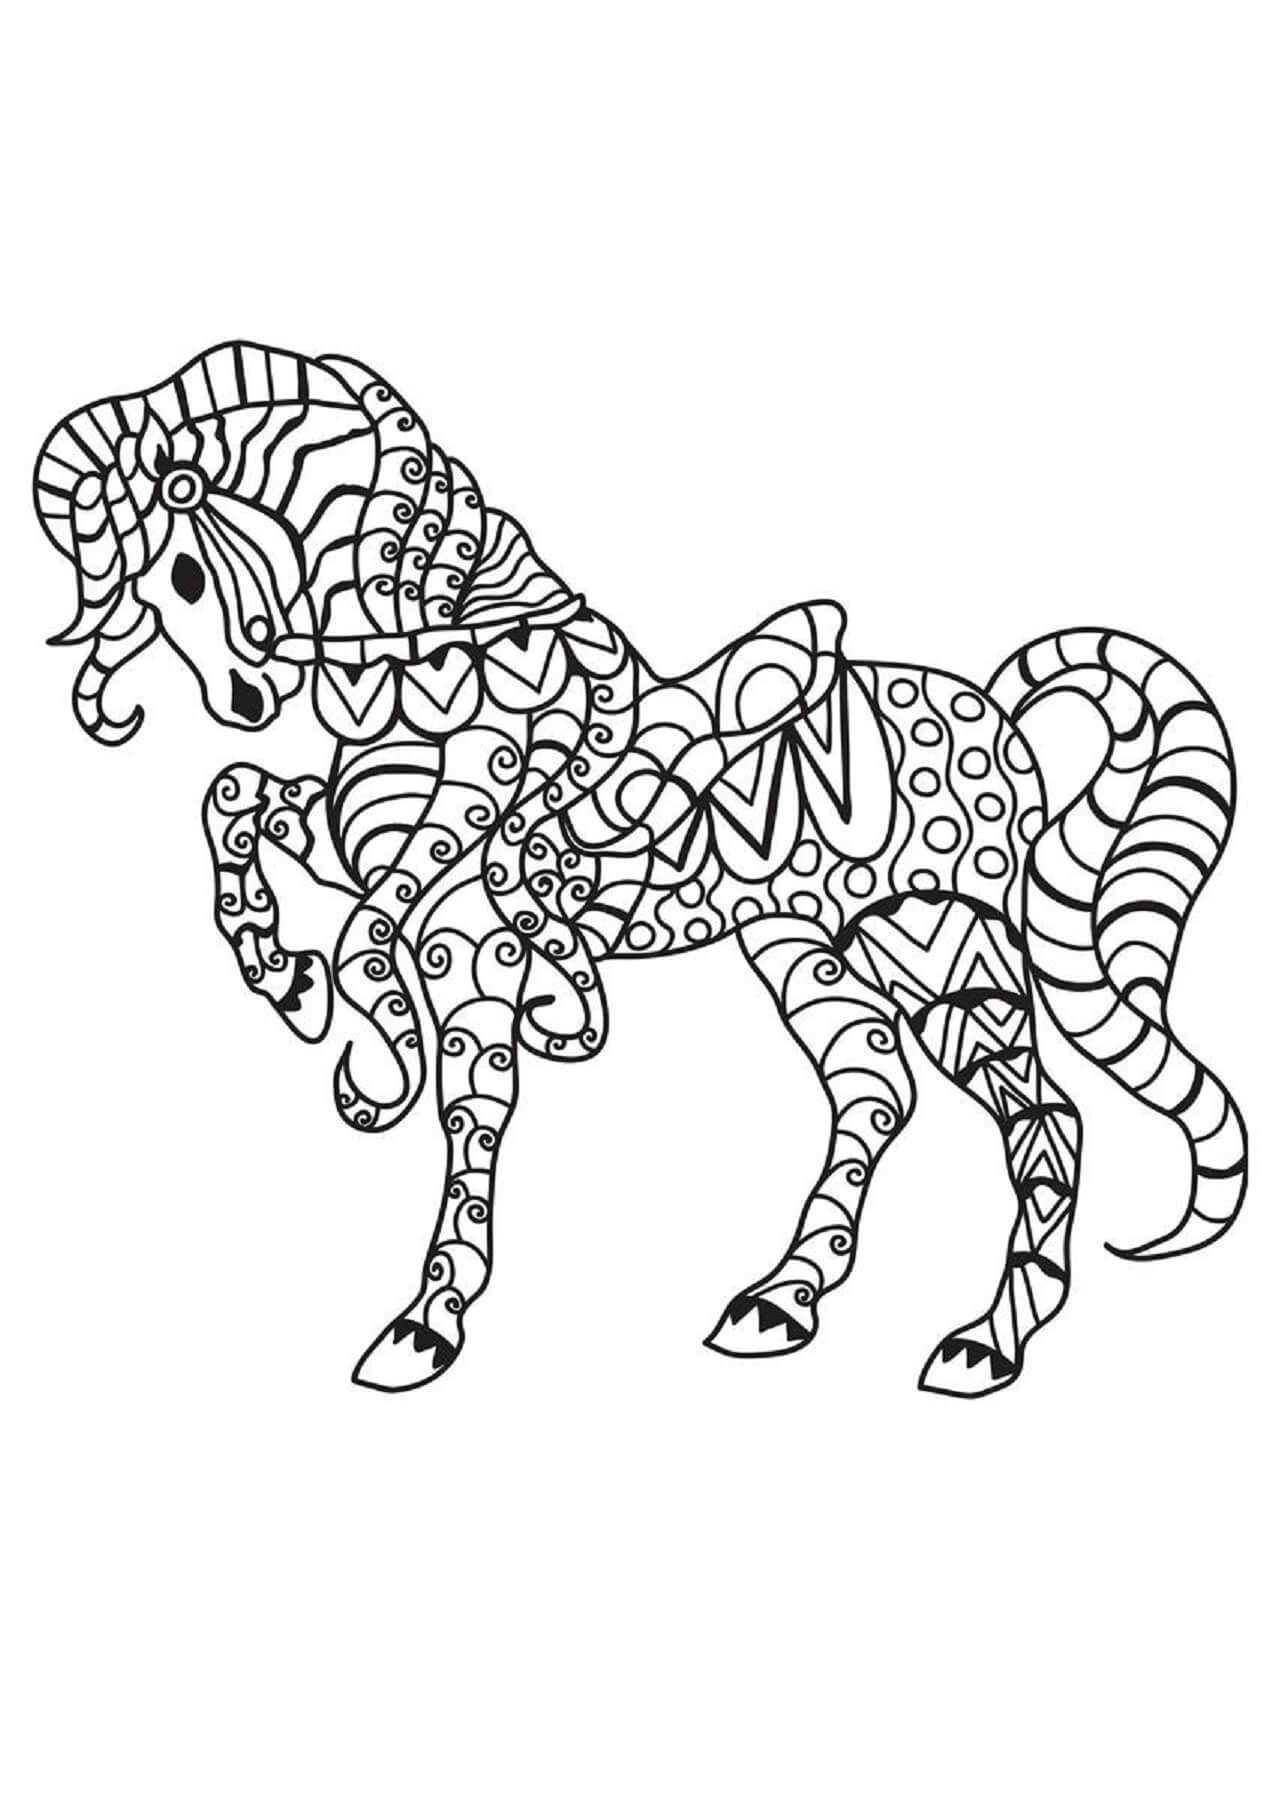 Mandala Horse Coloring Page - Sheet 14 Mandalas